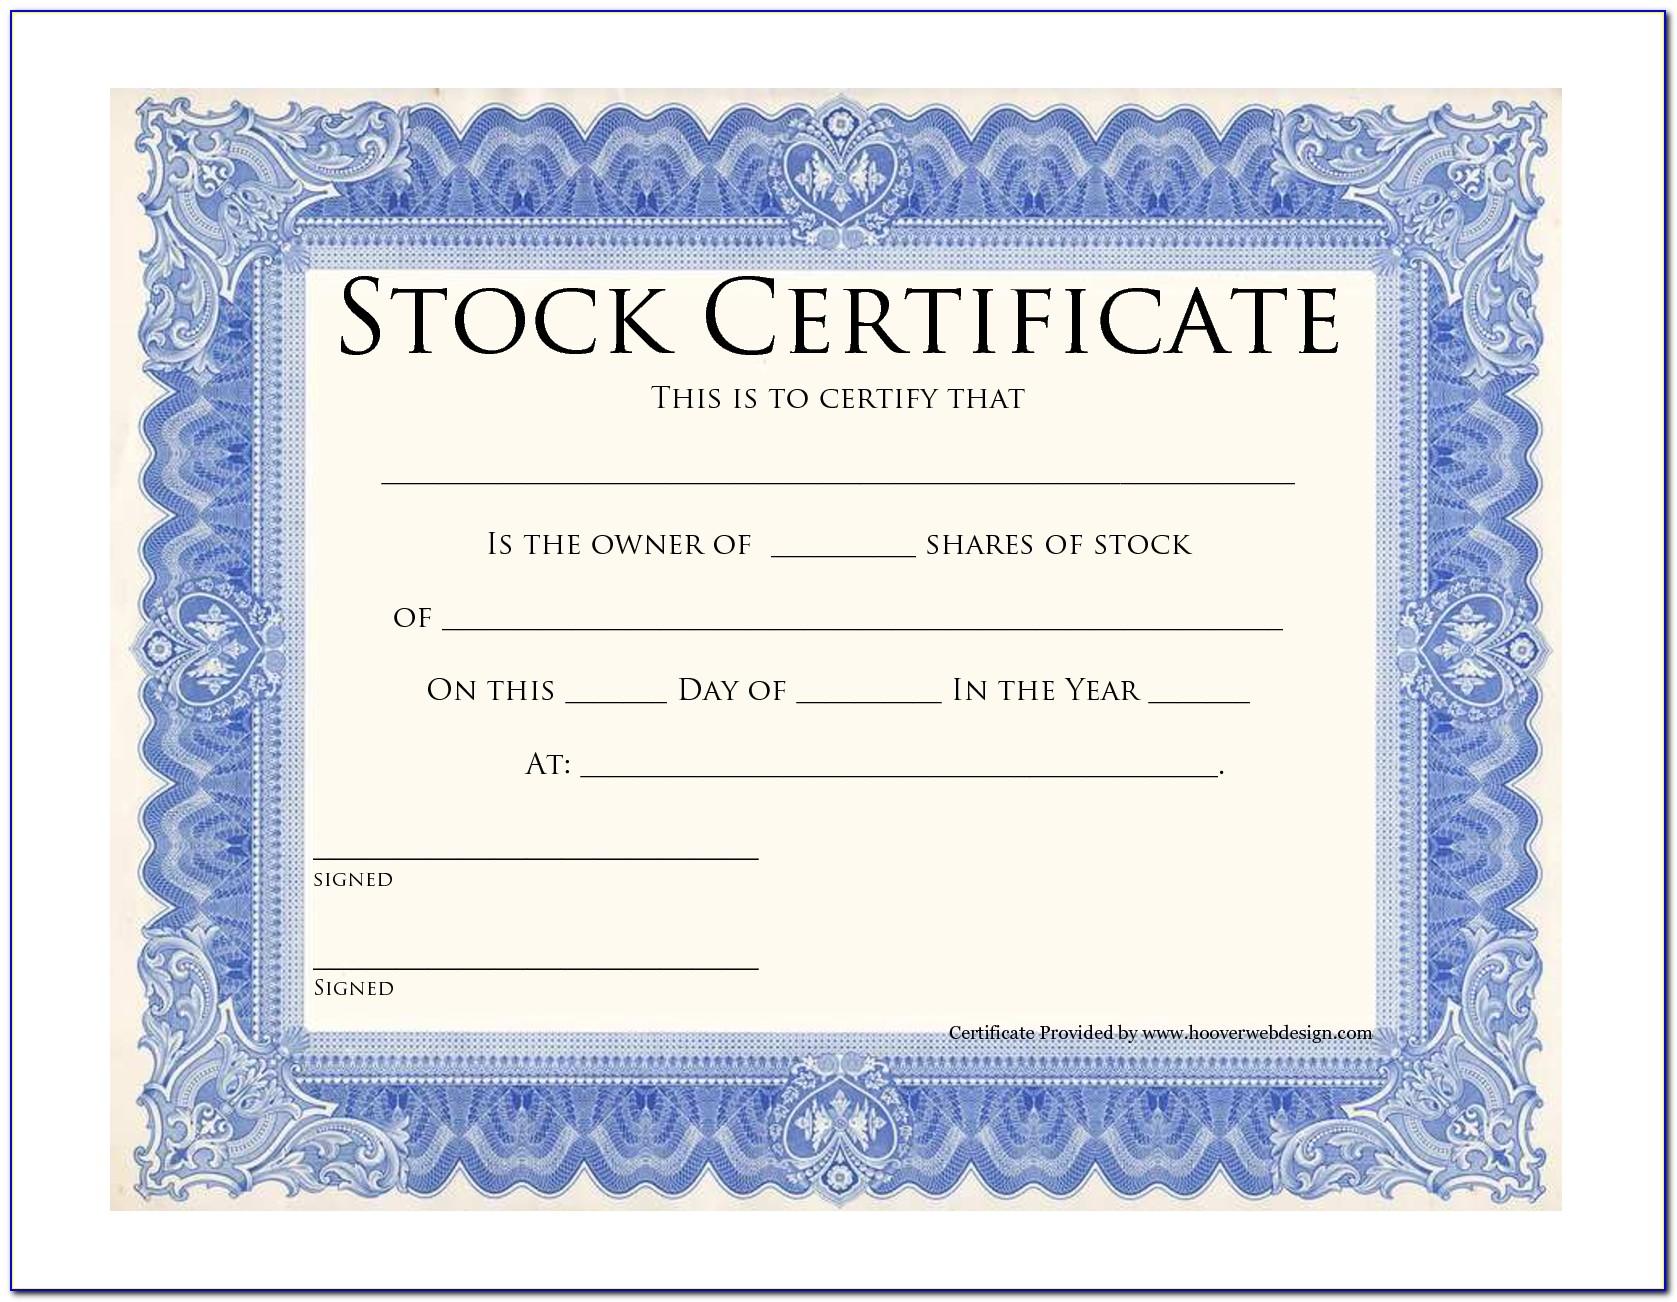 Stock Certificate Border Template Free